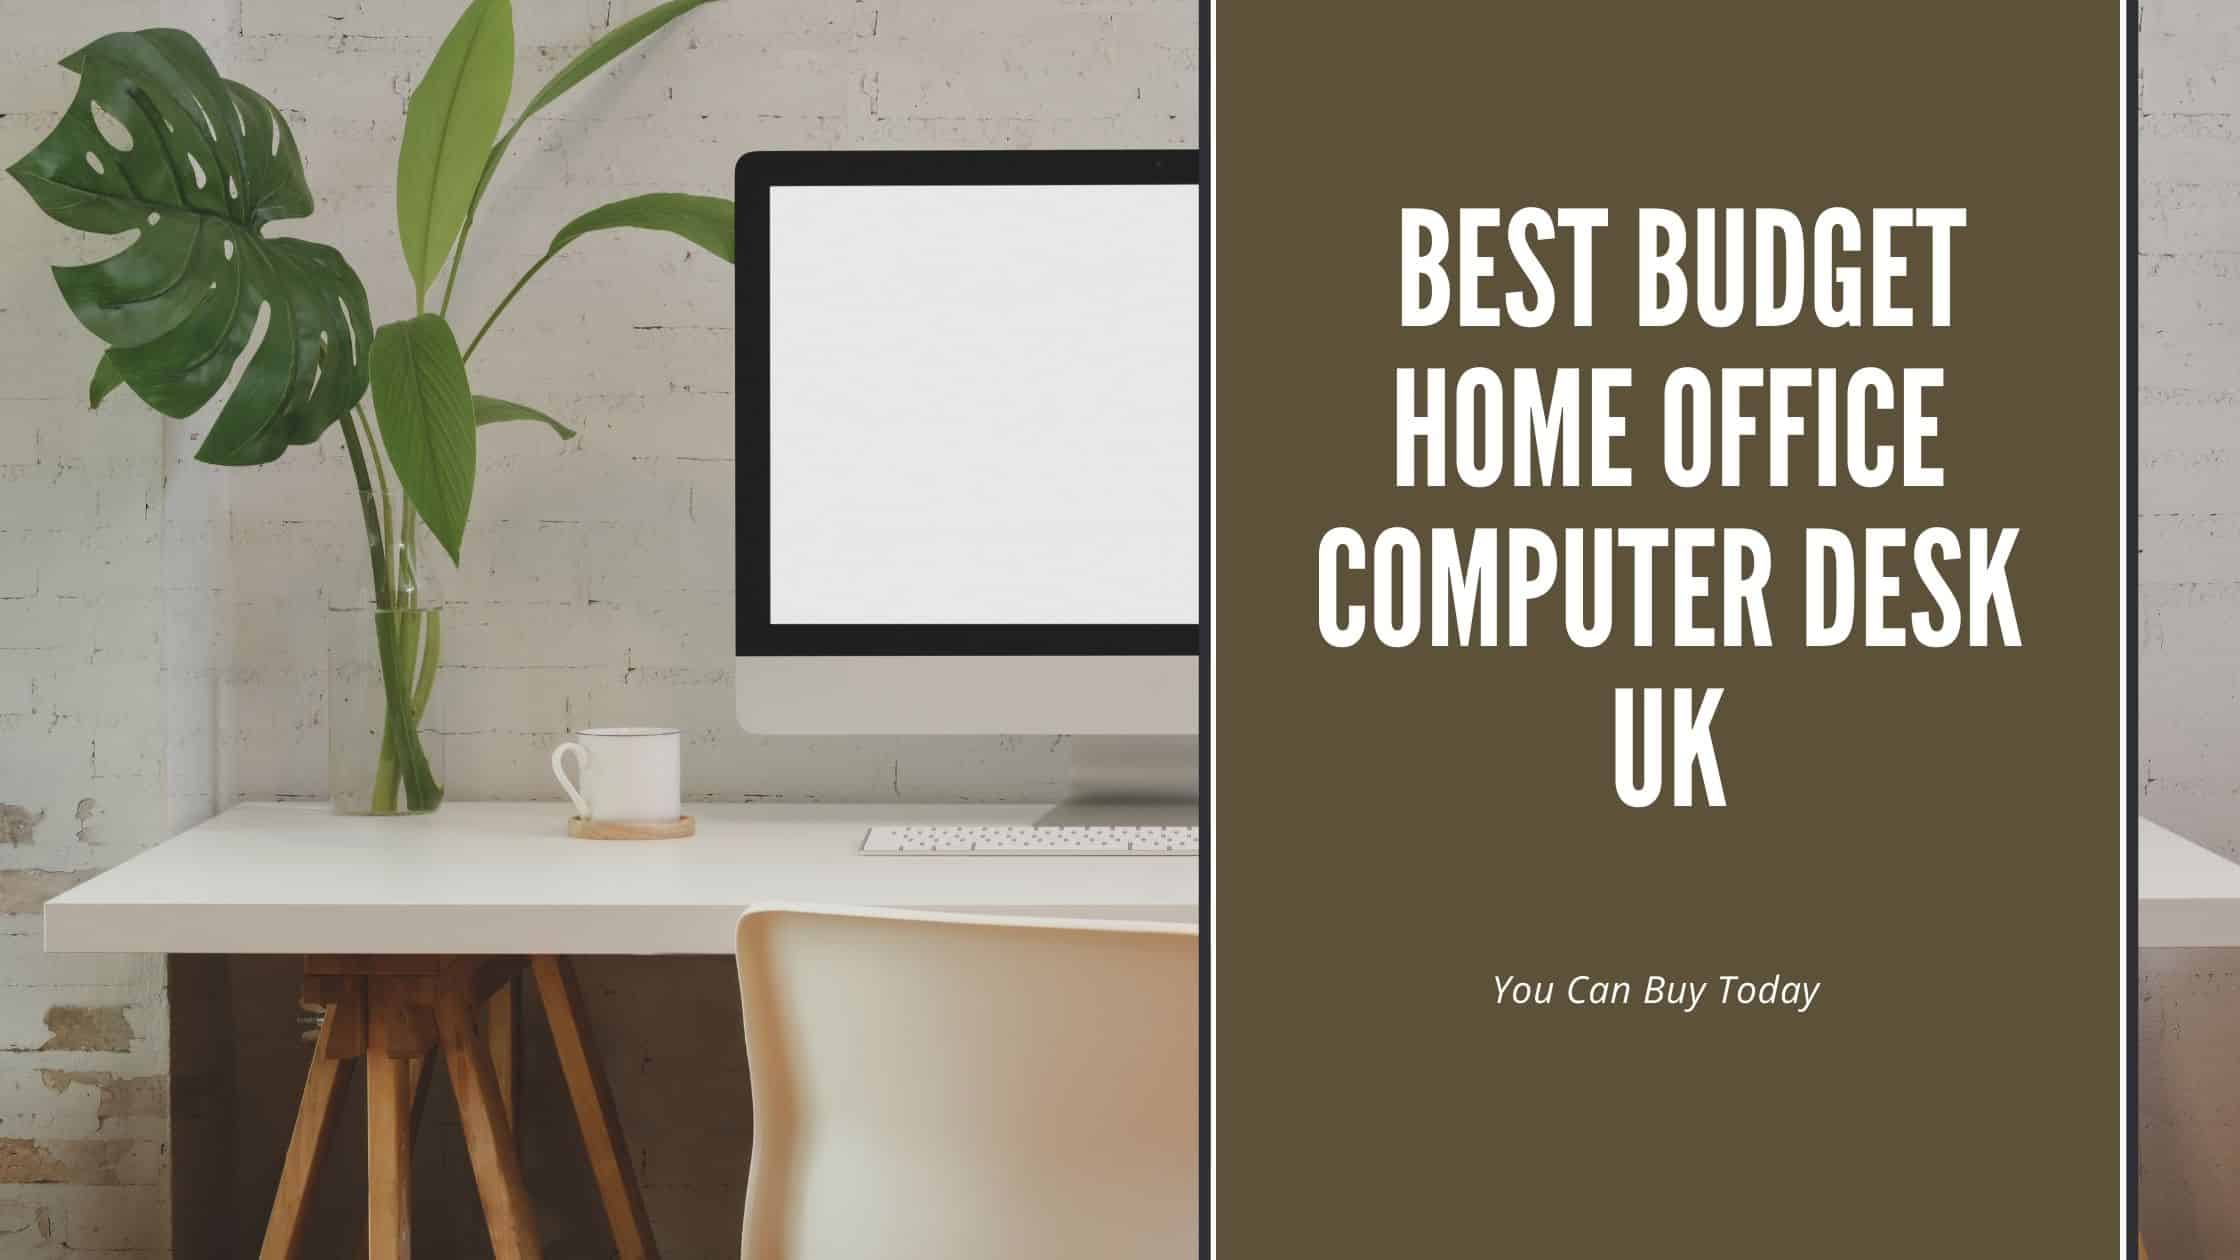 Best Budget Home Office Computer Desk UK